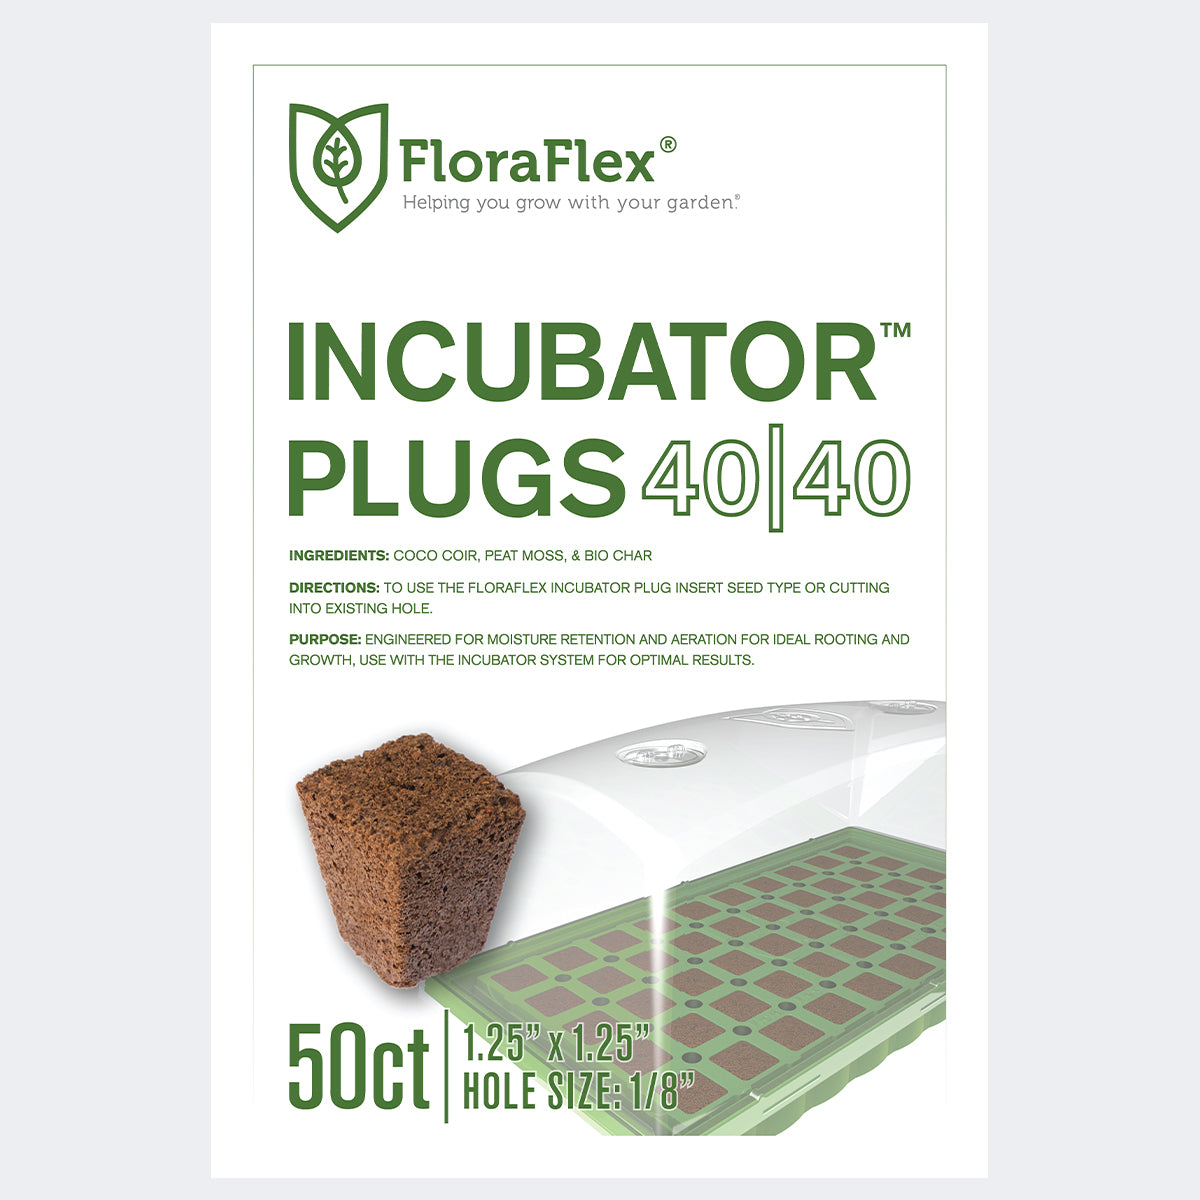 Incubator complete kit